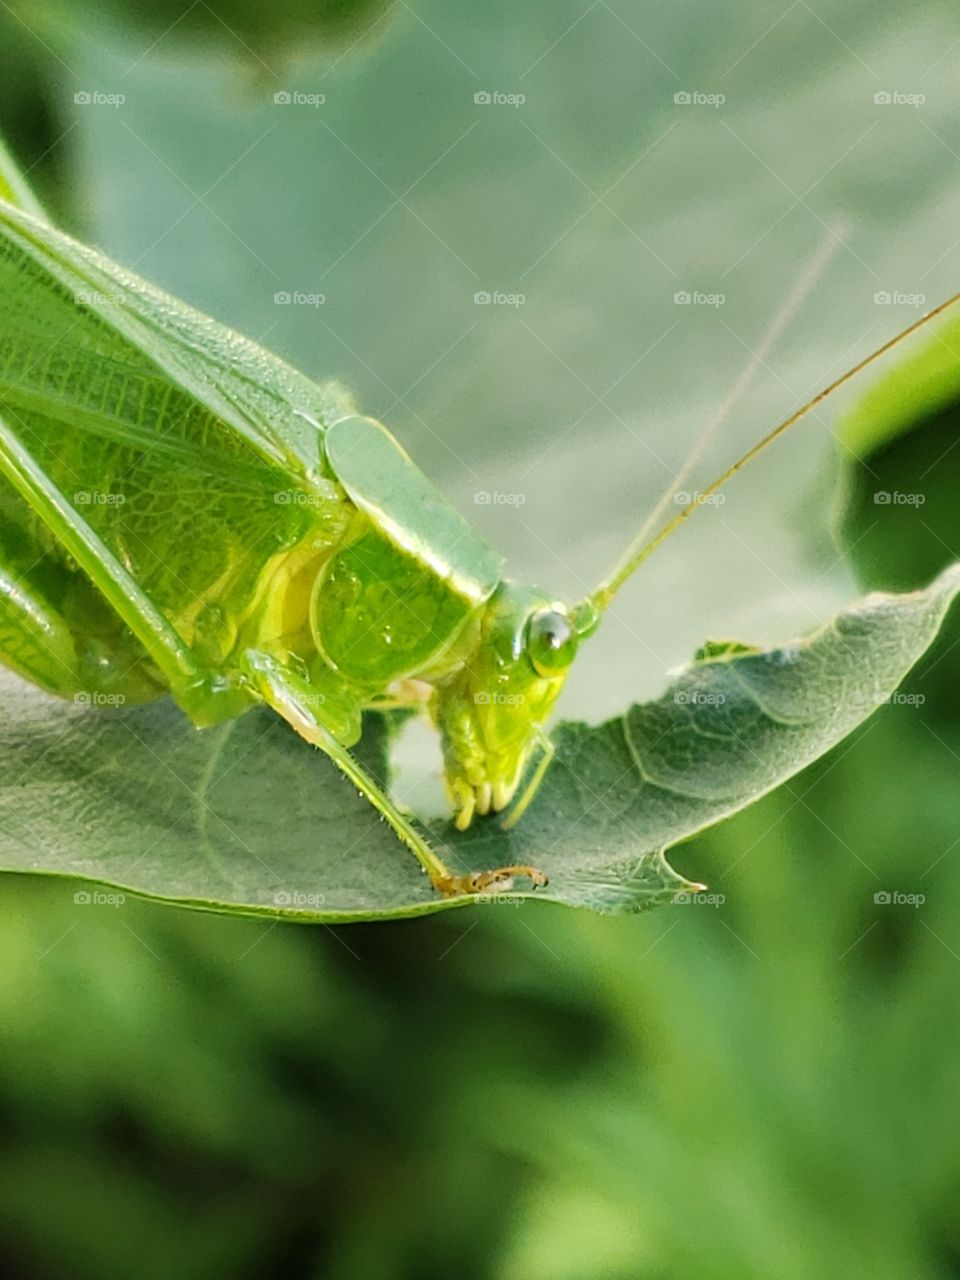 grasshopper eating its breakfast